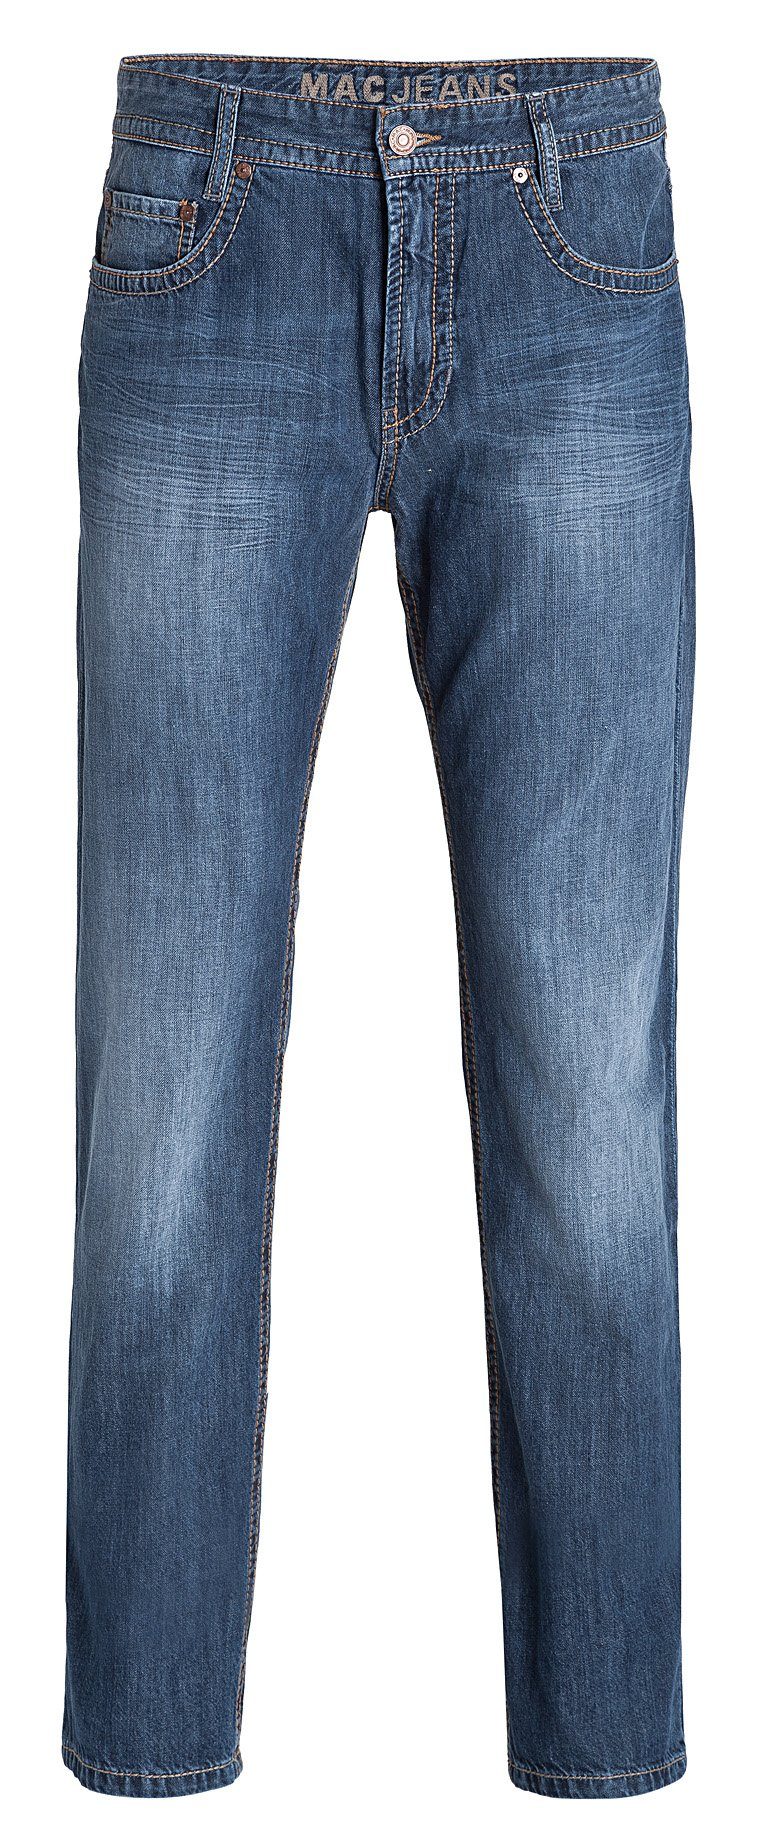 5-Pocket-Jeans MAC JEANS - Arne, Light Weight Denim